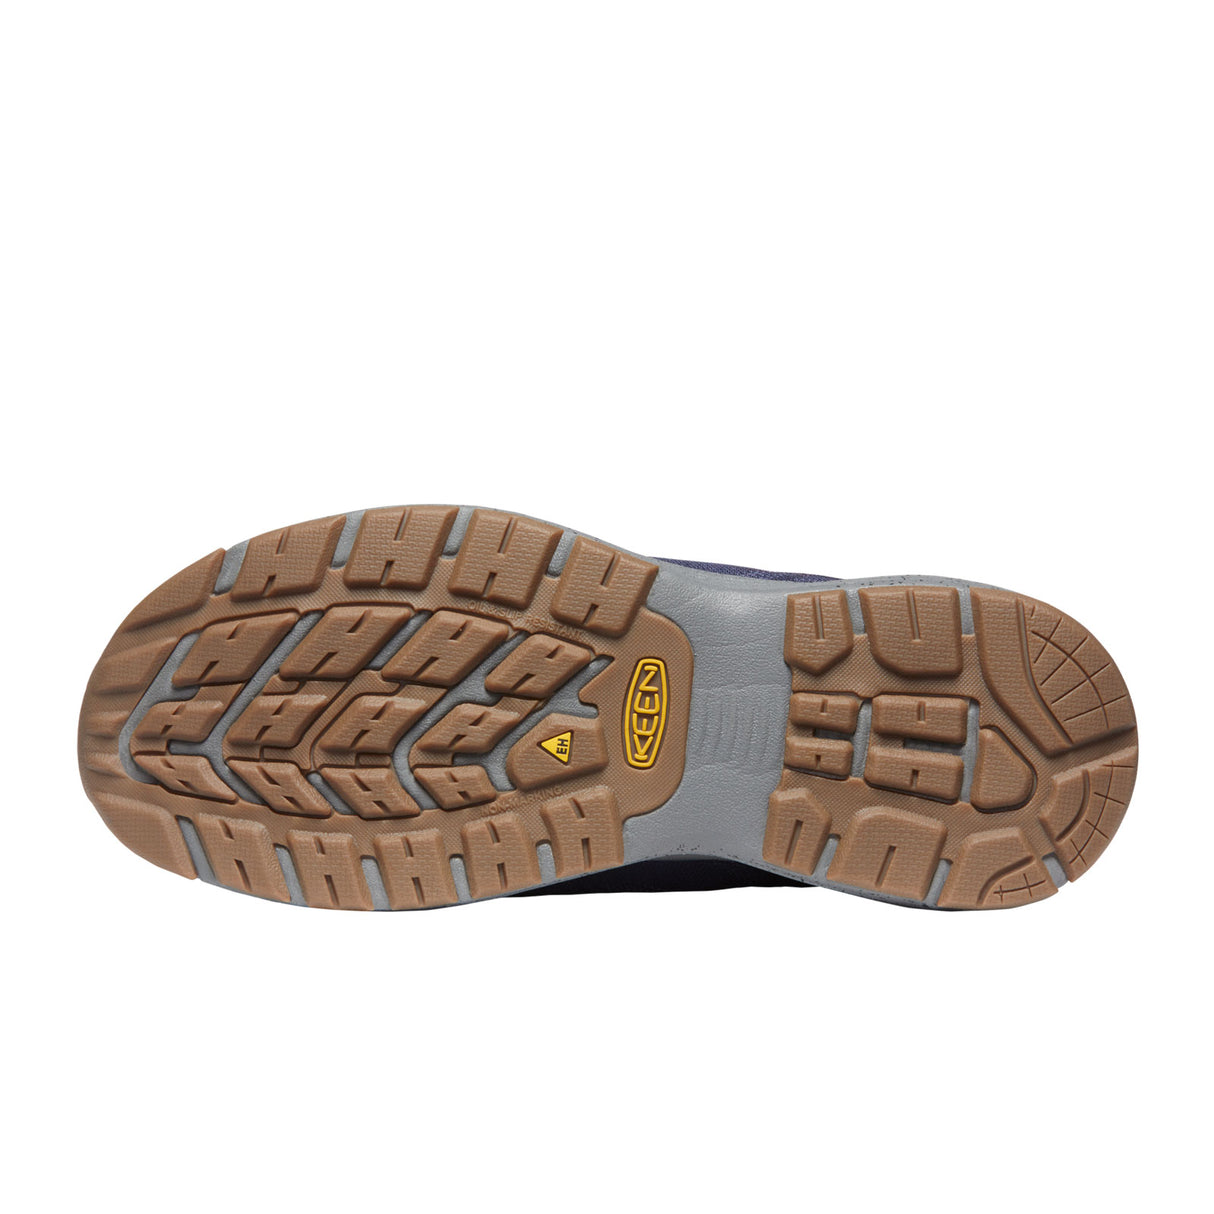 Keen Utility Sparta II Aluminum Toe Work Shoe (Men) - Sky Captain/Vapor Boots - Work - Low - The Heel Shoe Fitters